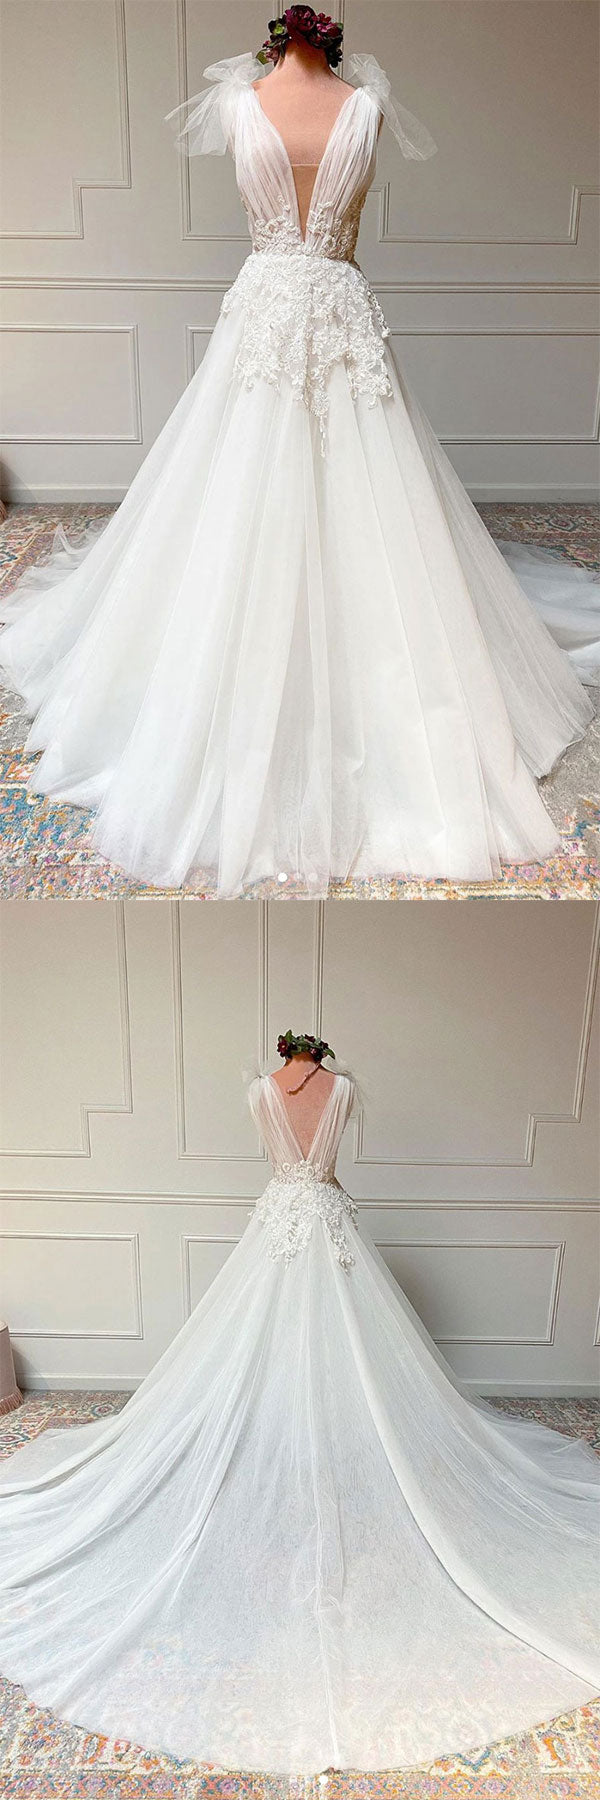 White v neck tulle lace long prom dress white tulle wedding dress